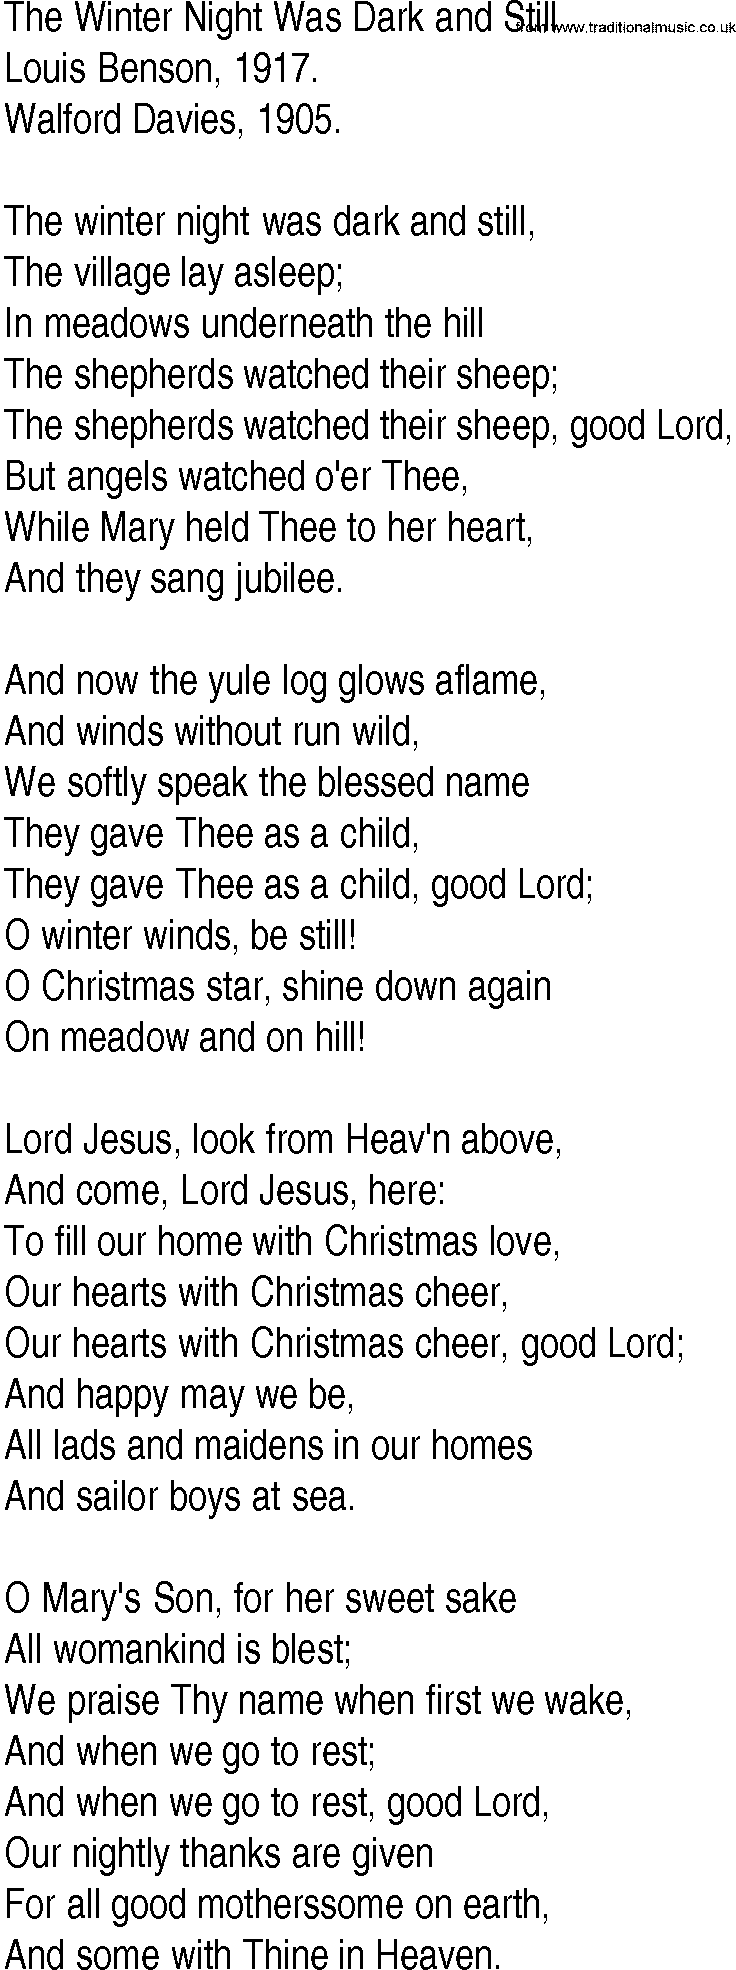 Hymn and Gospel Song: The Winter Night Was Dark and Still by Louis Benson lyrics